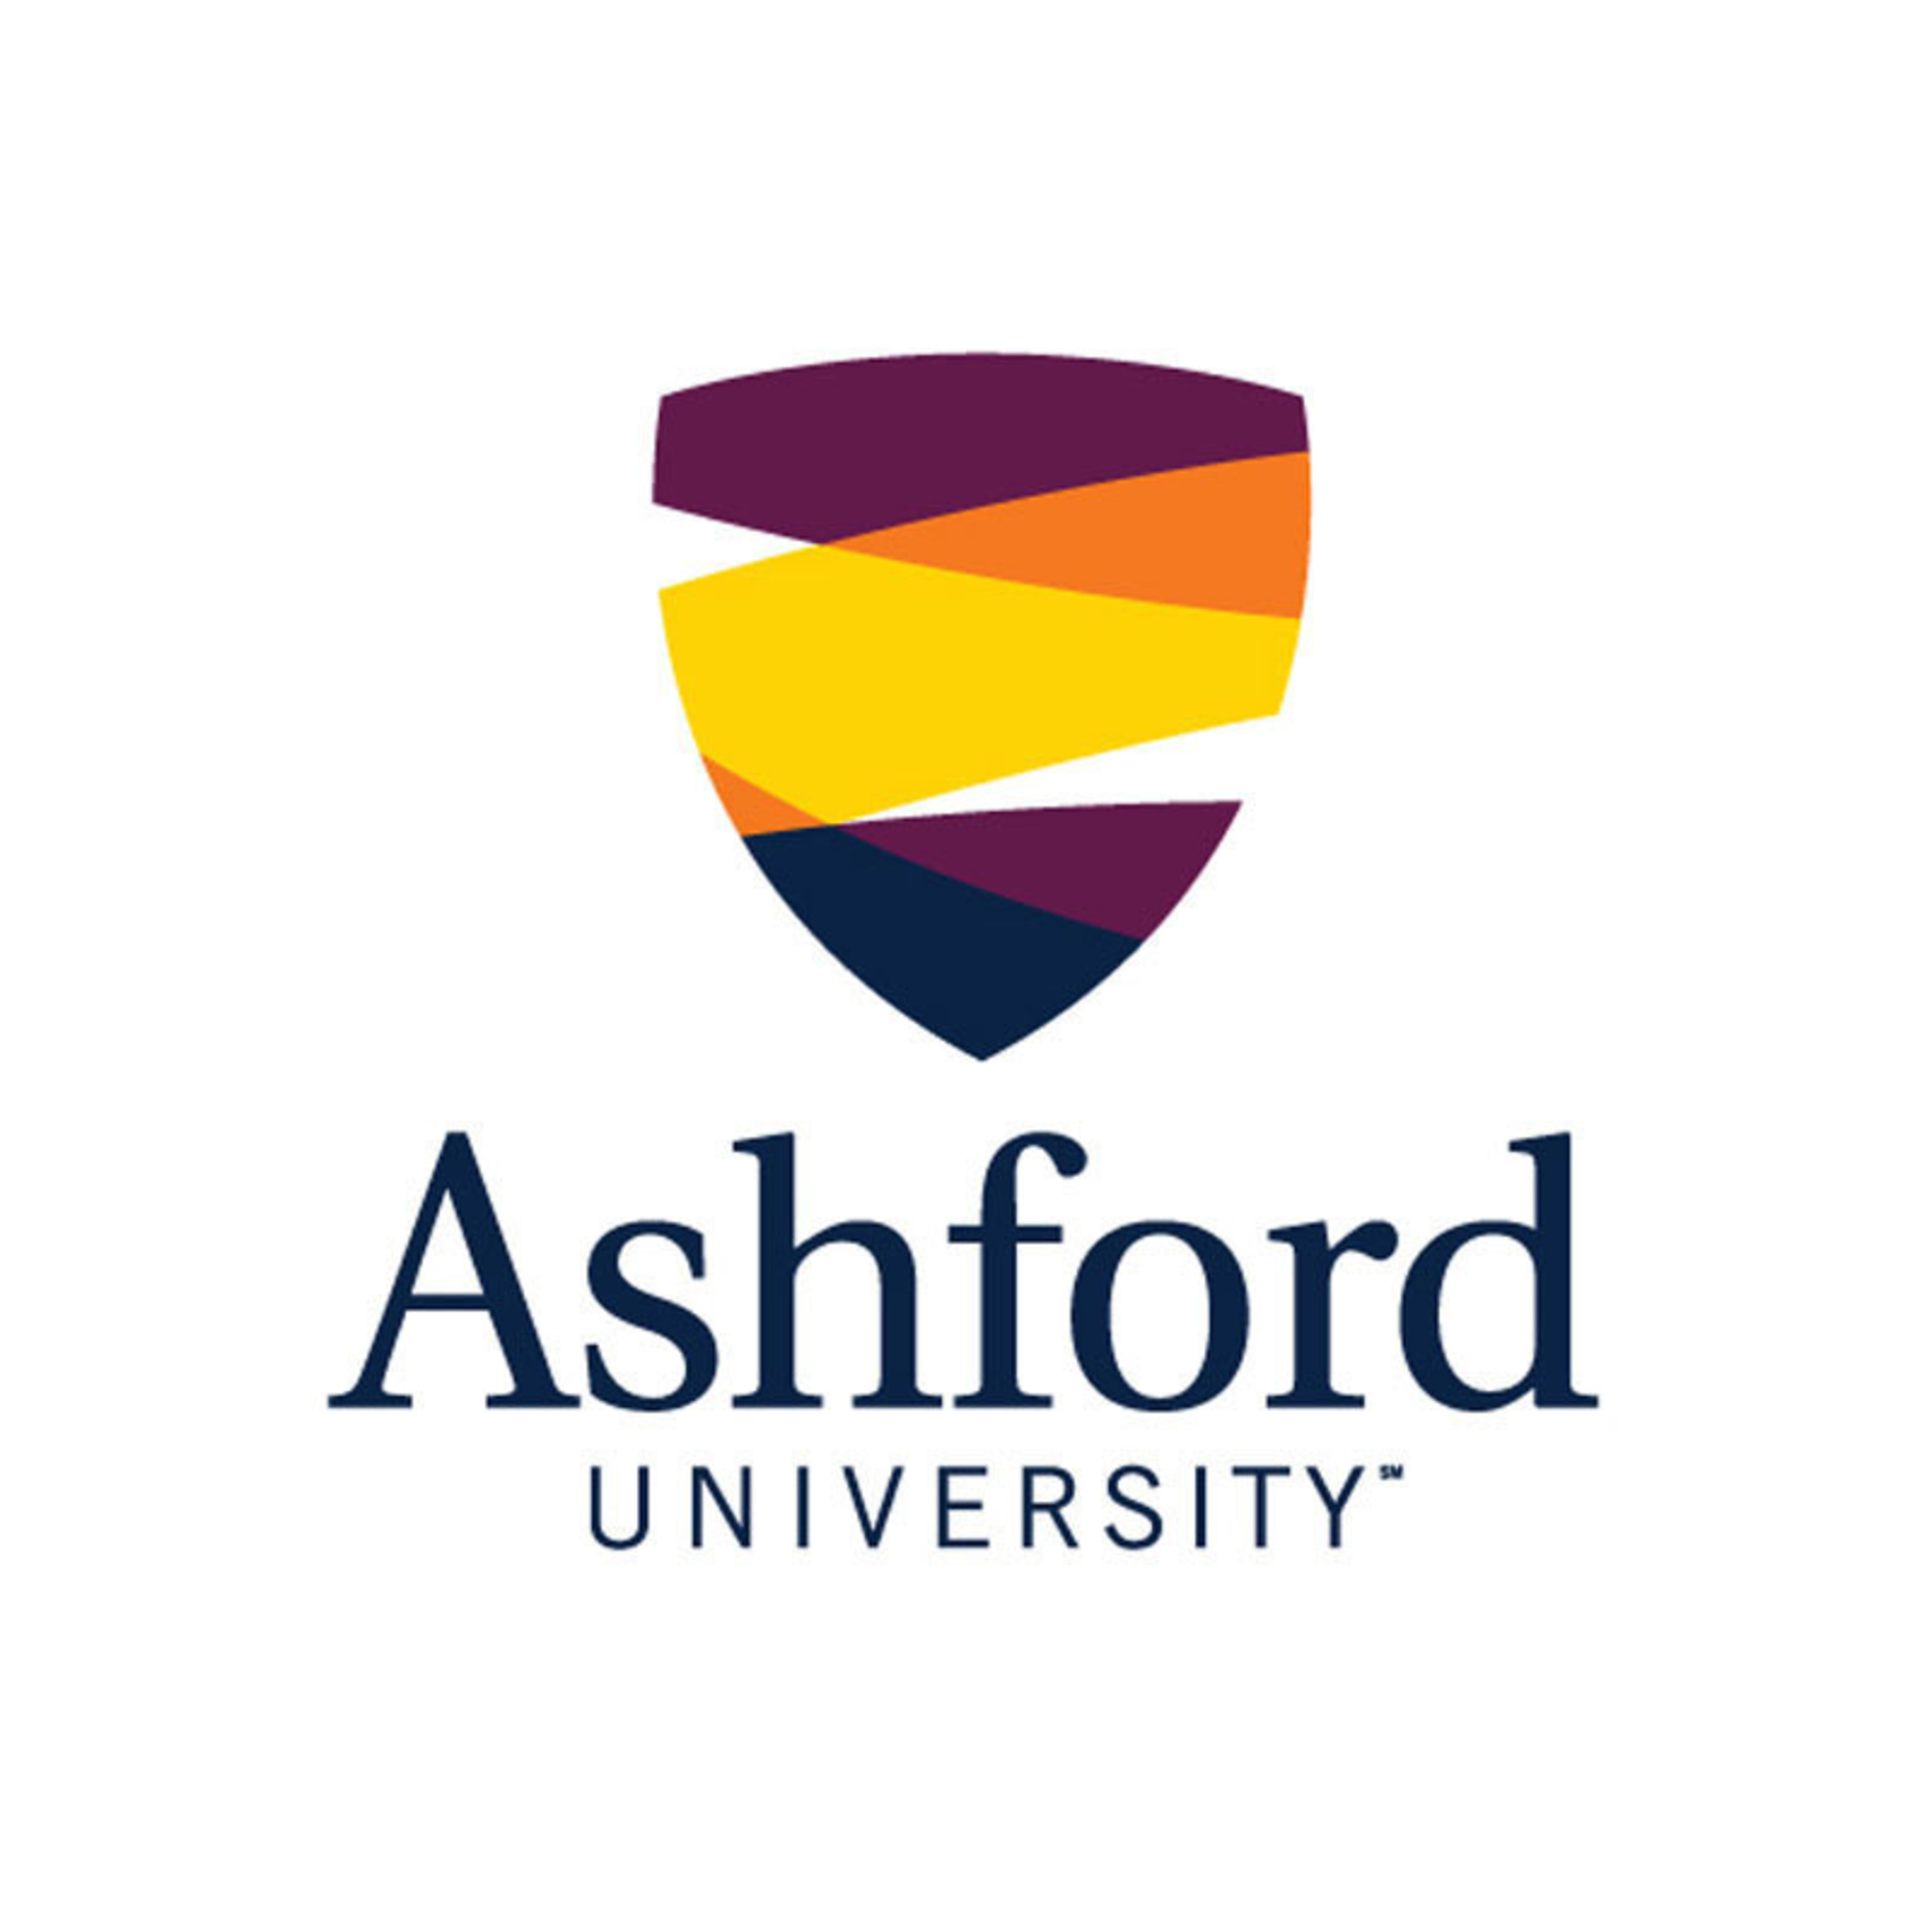 Ashford University Logo. (PRNewsFoto/Ashford University) (PRNewsFoto/)